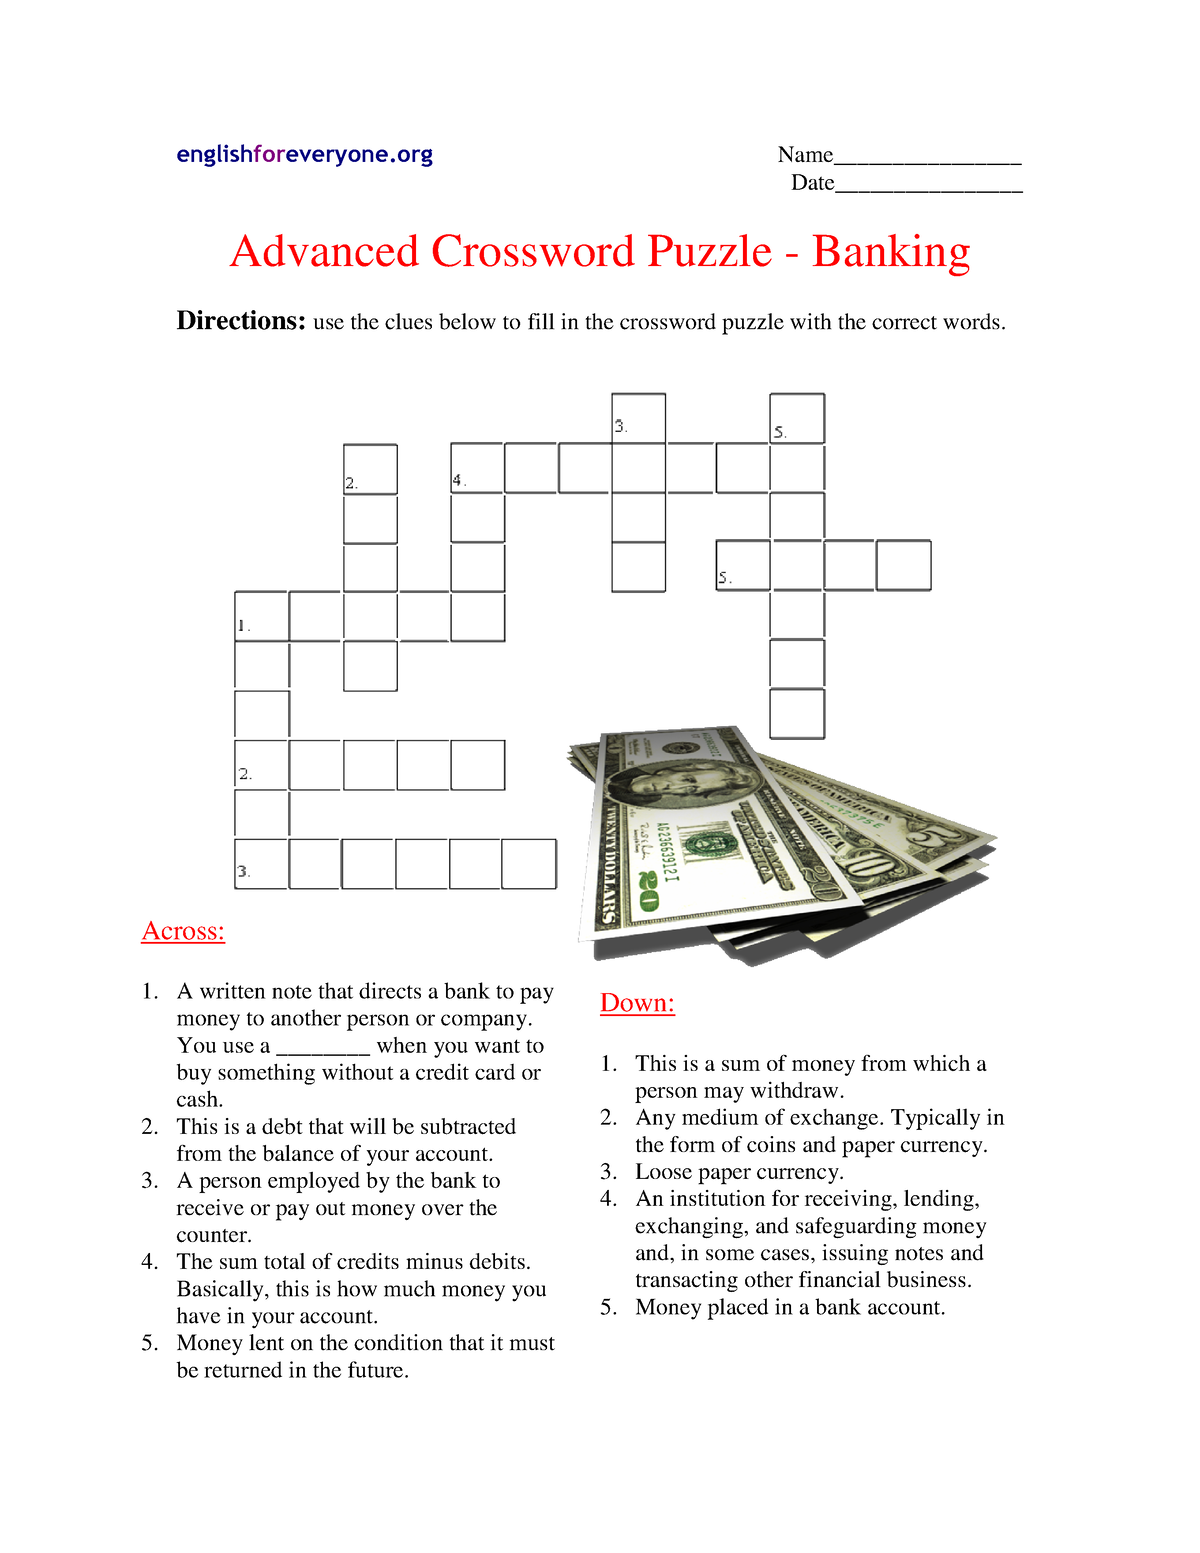 Advanced Crossword Puzzle Banking StuDocu